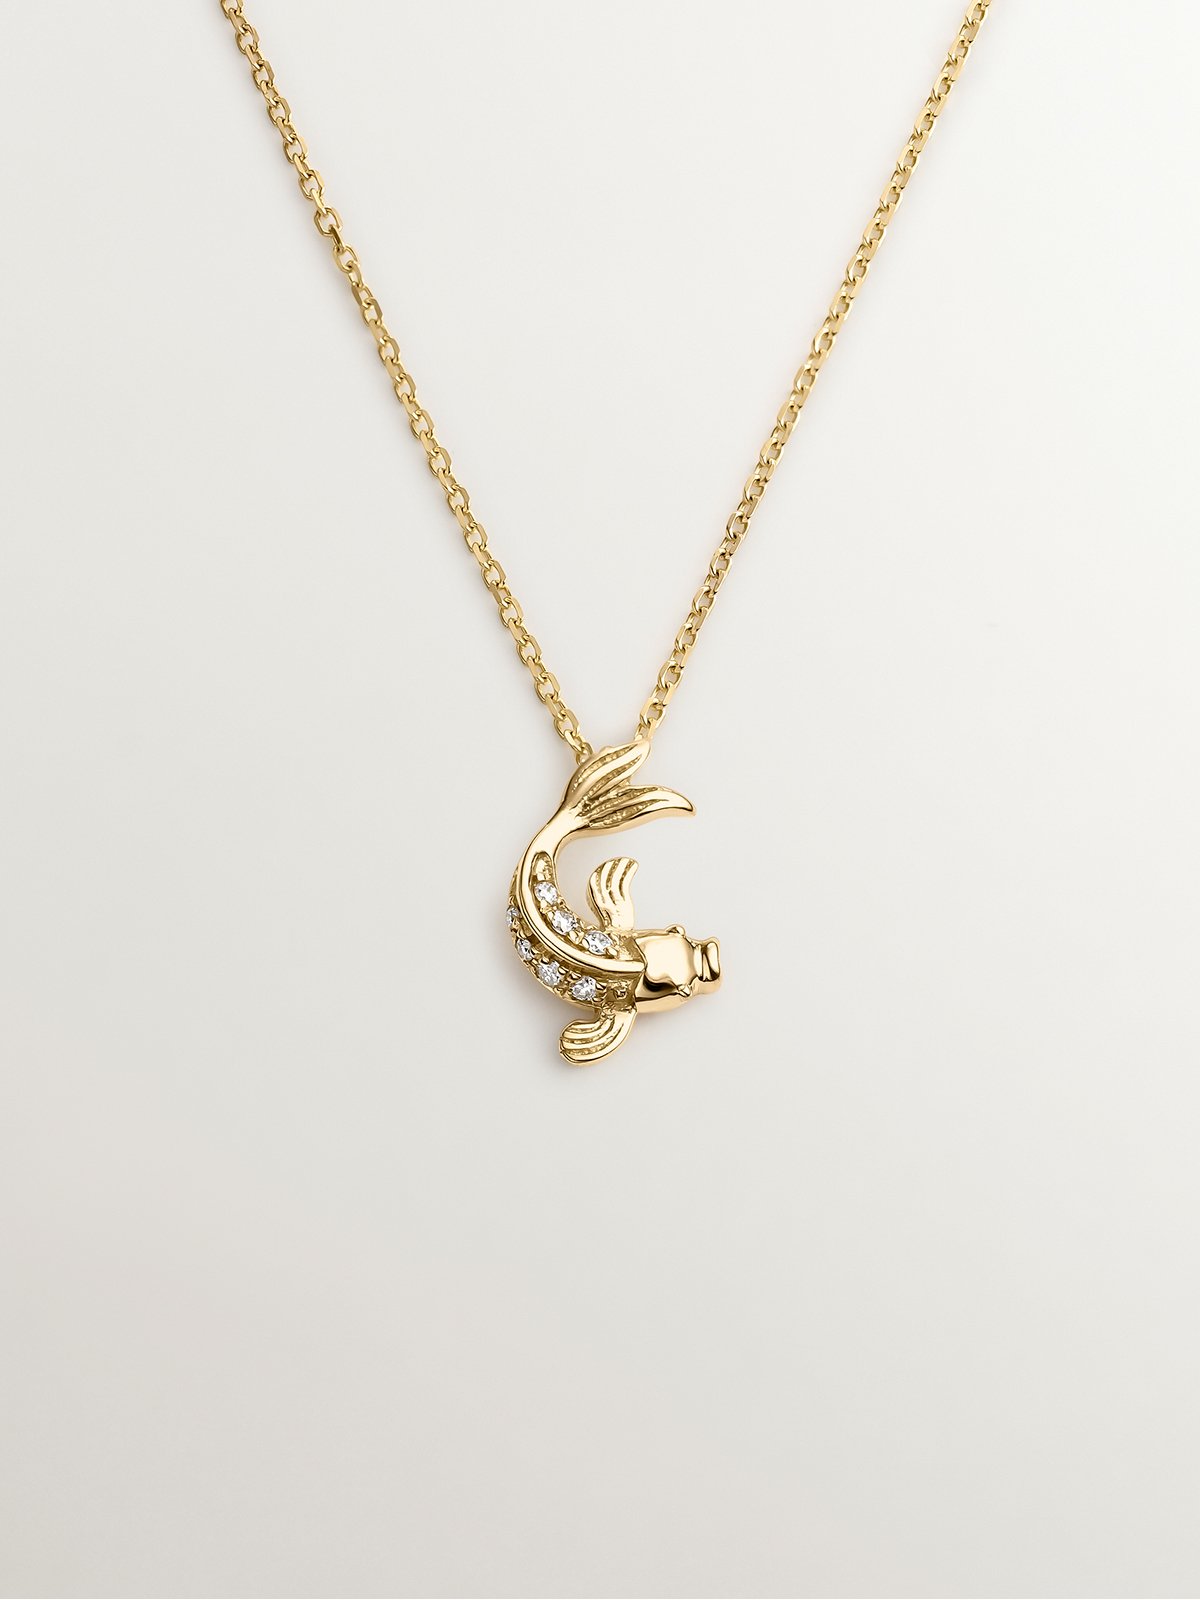 18k yellow gold pendant with diamond-shaped fish.